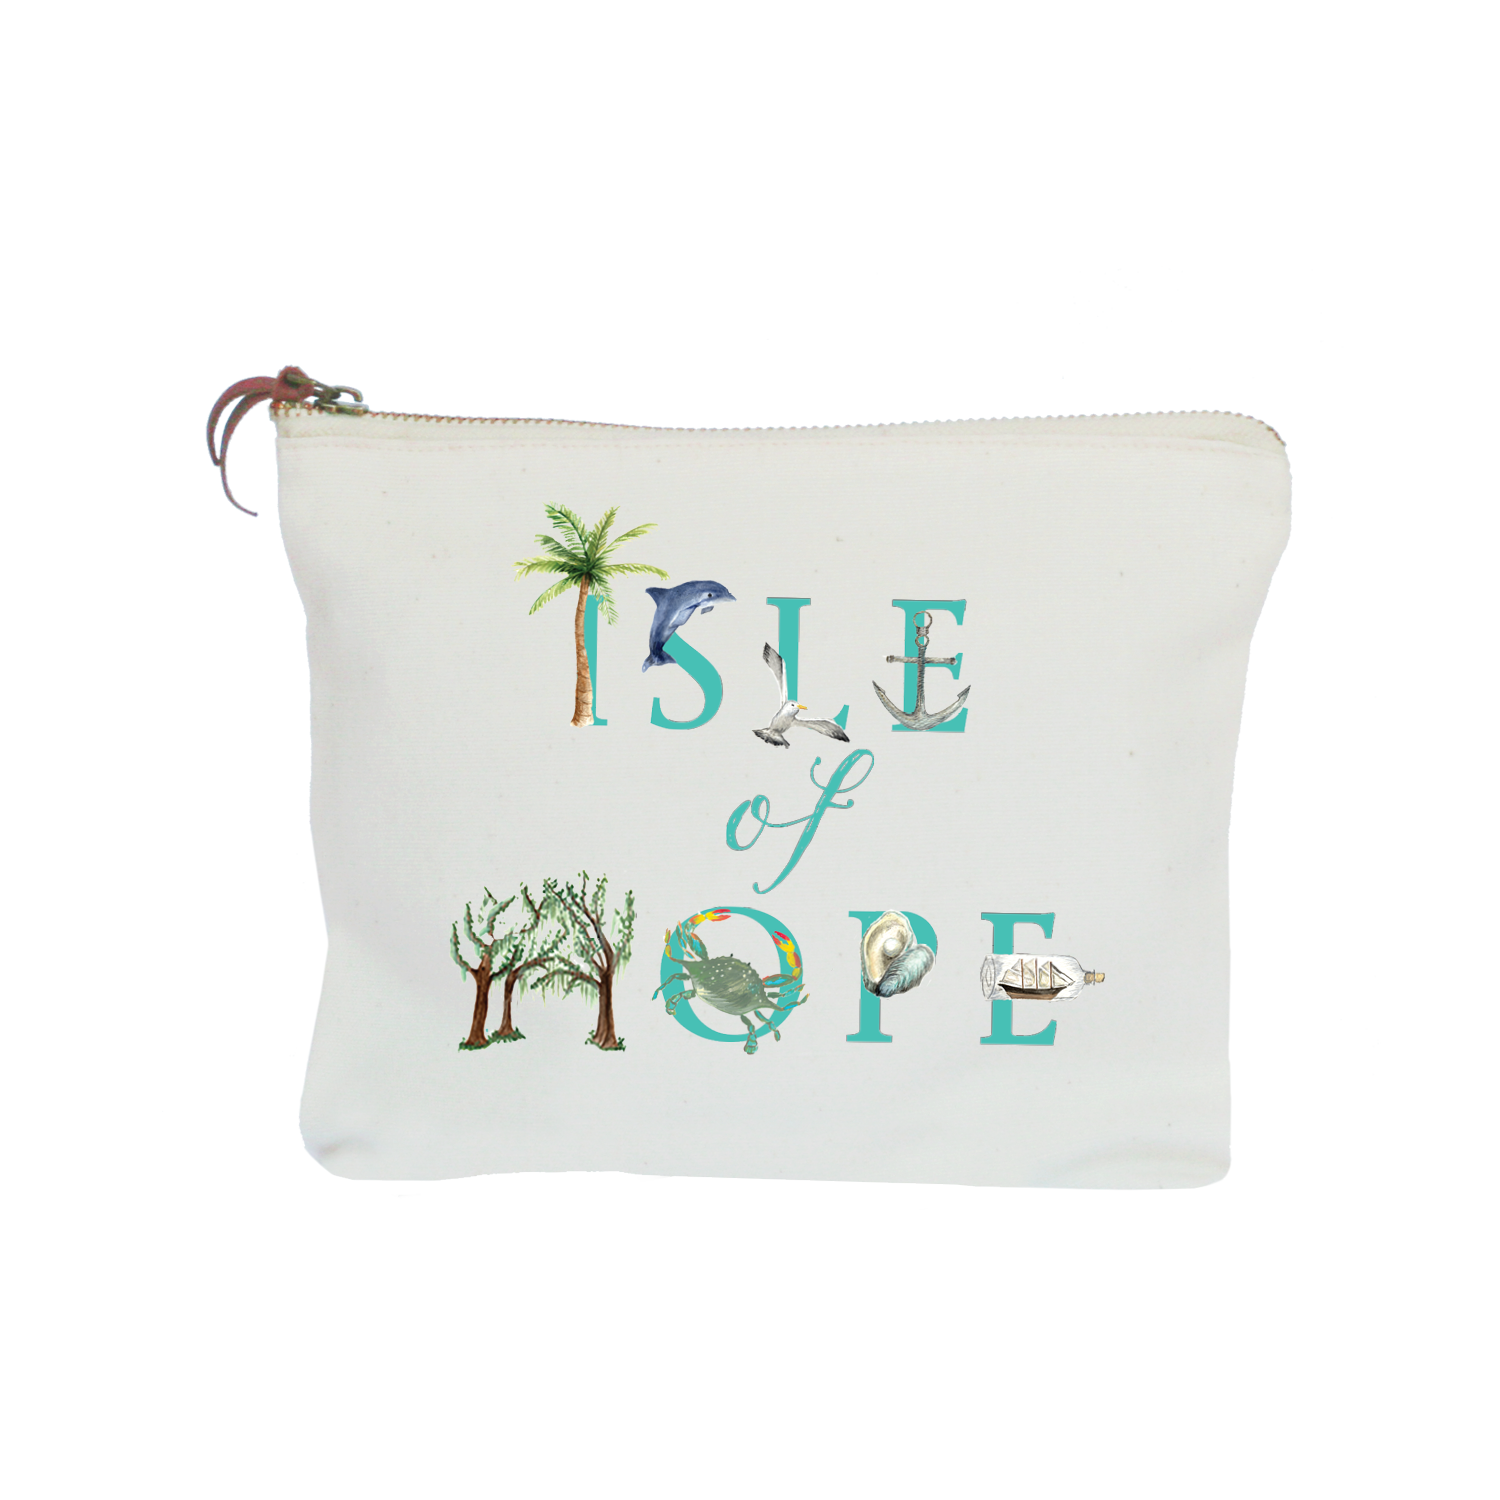 Isle of Hope zipper pouch